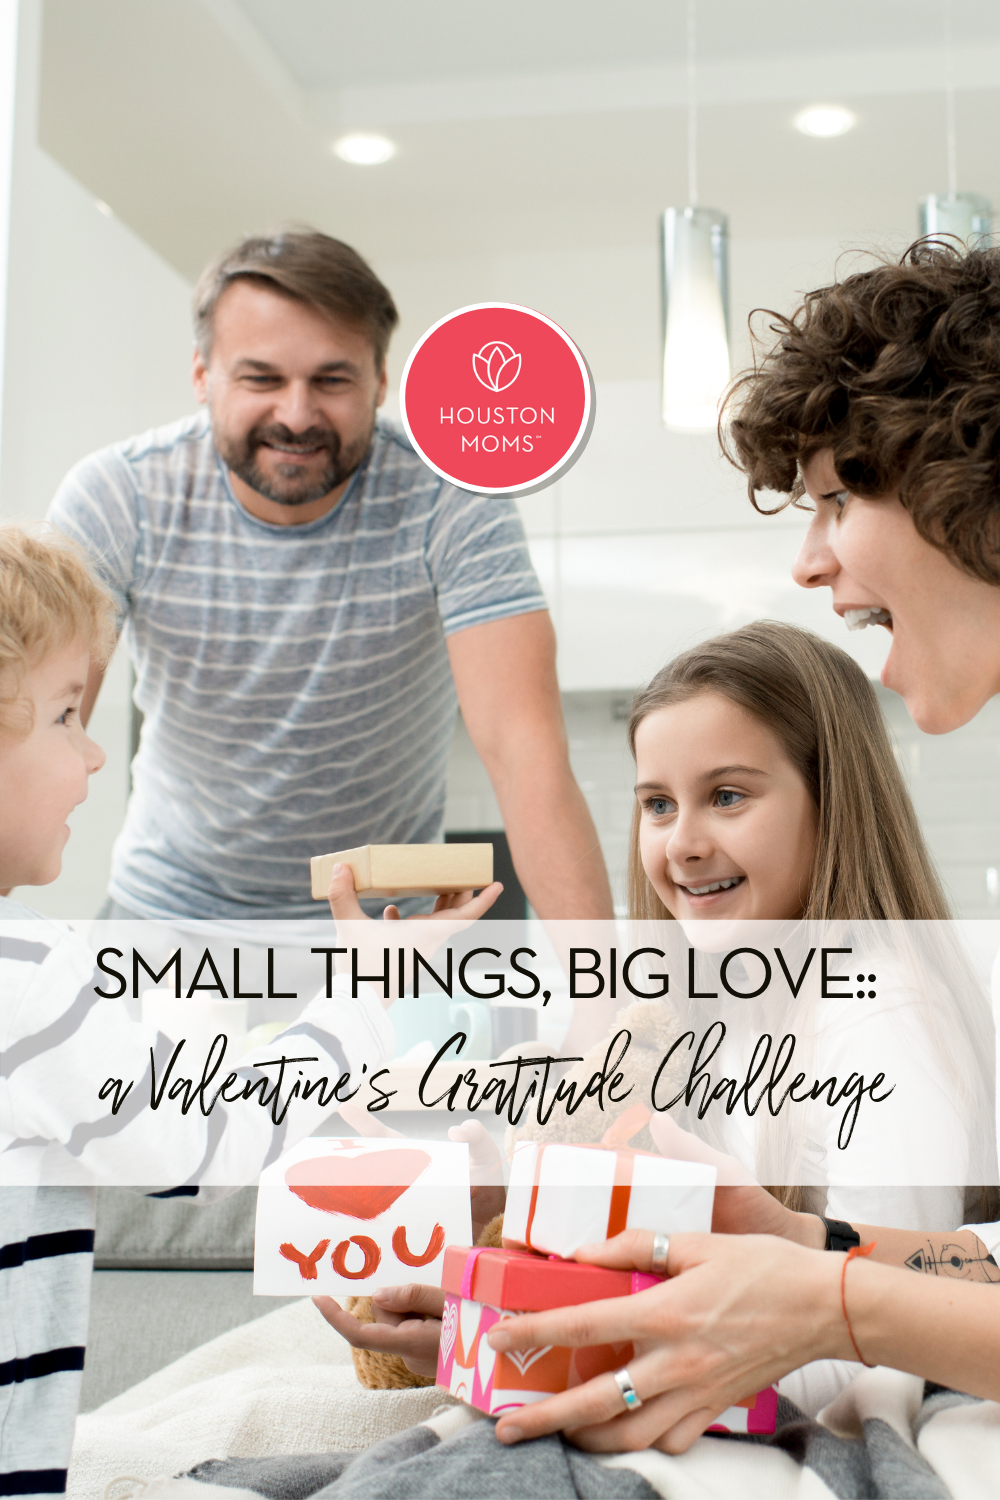 Houston Moms "Small Things, Big Love:: A Valentine's Gratitude Challenge" #houstonmoms #momsaroundhouston